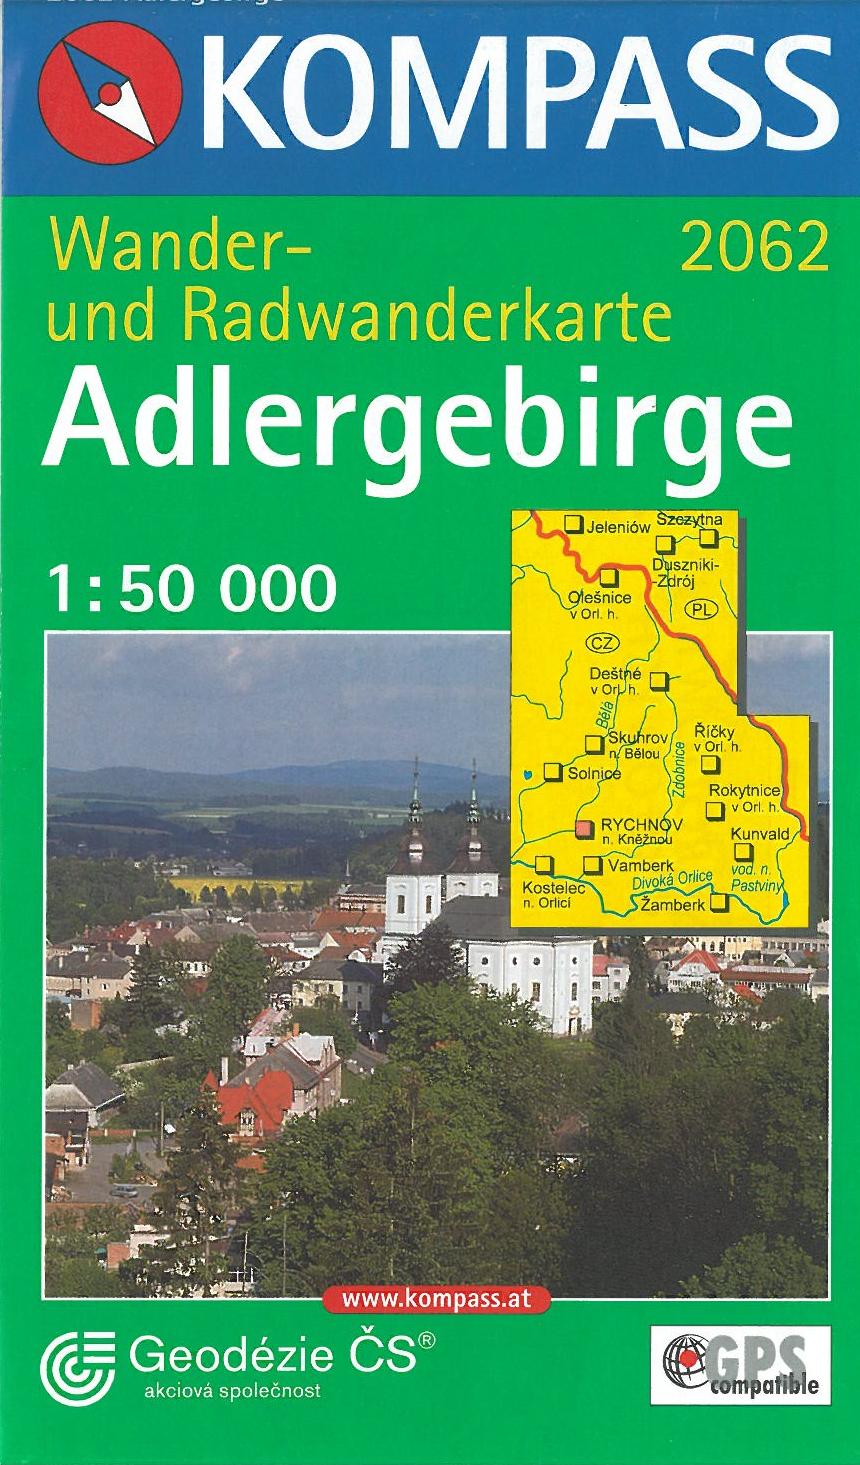 Adlergebirge (Orlicke Hory), Kompass Wander- u. Radwanderkarte 2062 1:50 000